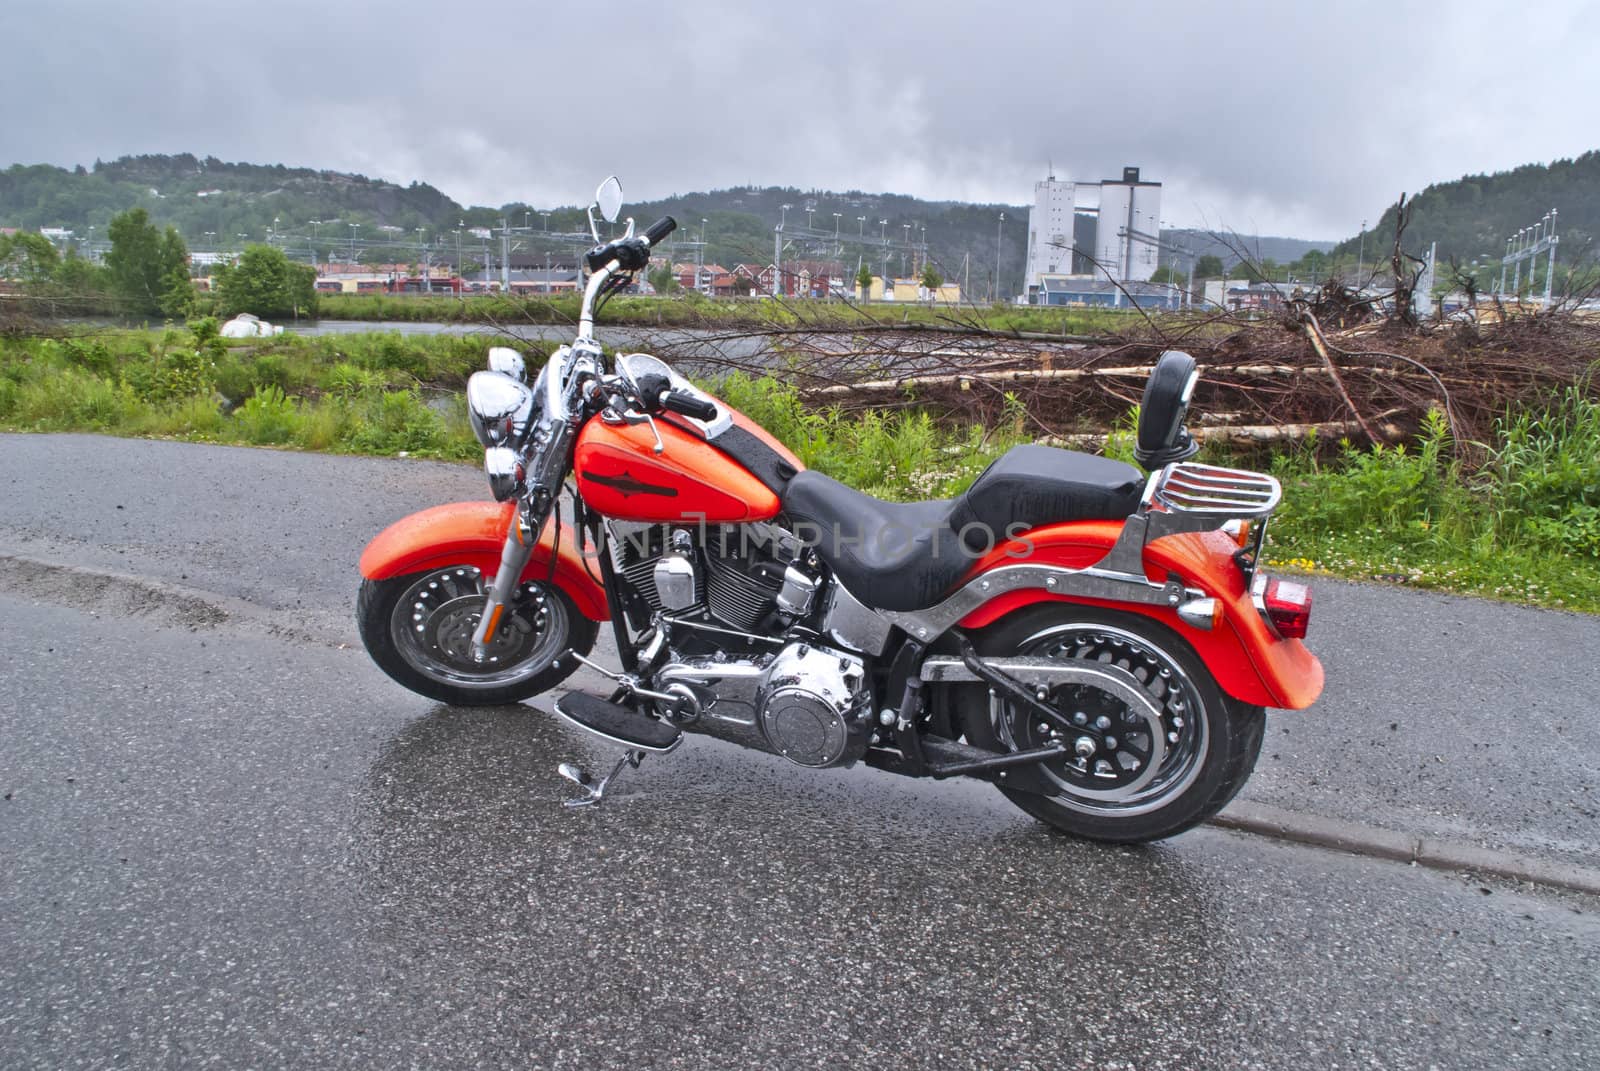 Harley Davidson parked near the Tista River in Halden city